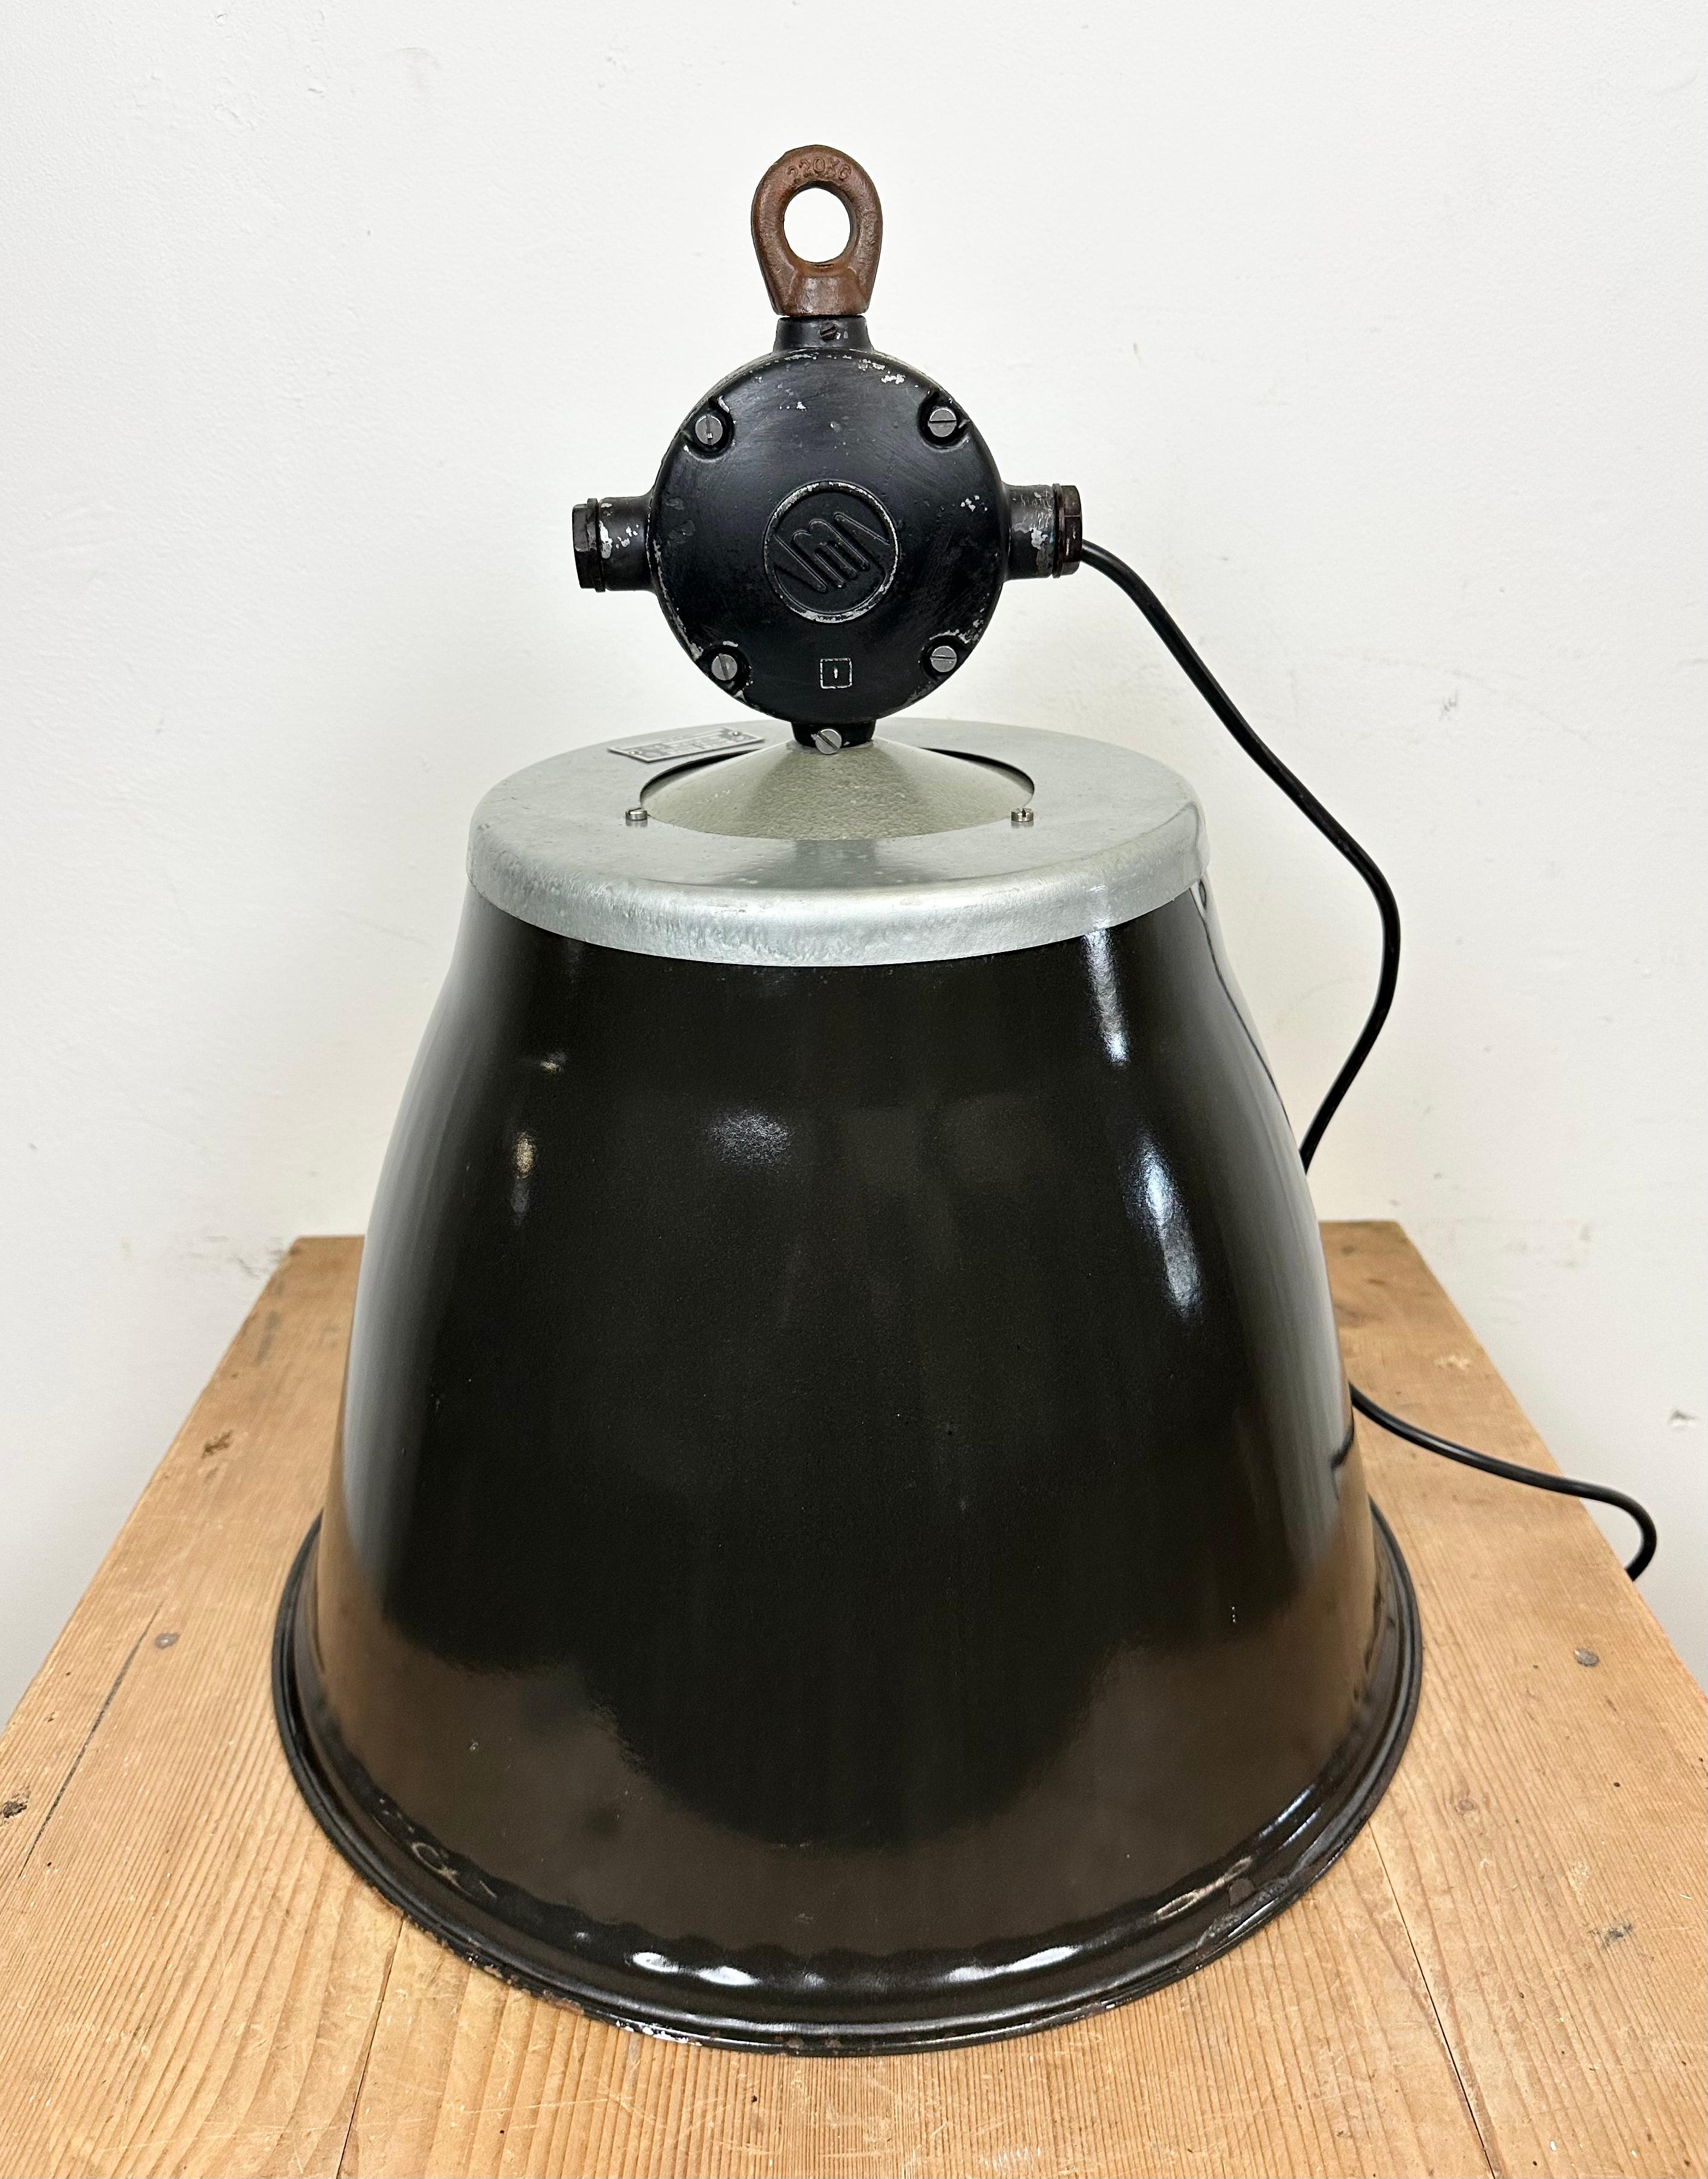 Industrial Black Enamel Factory Pendant Lamp, 1960s For Sale 5